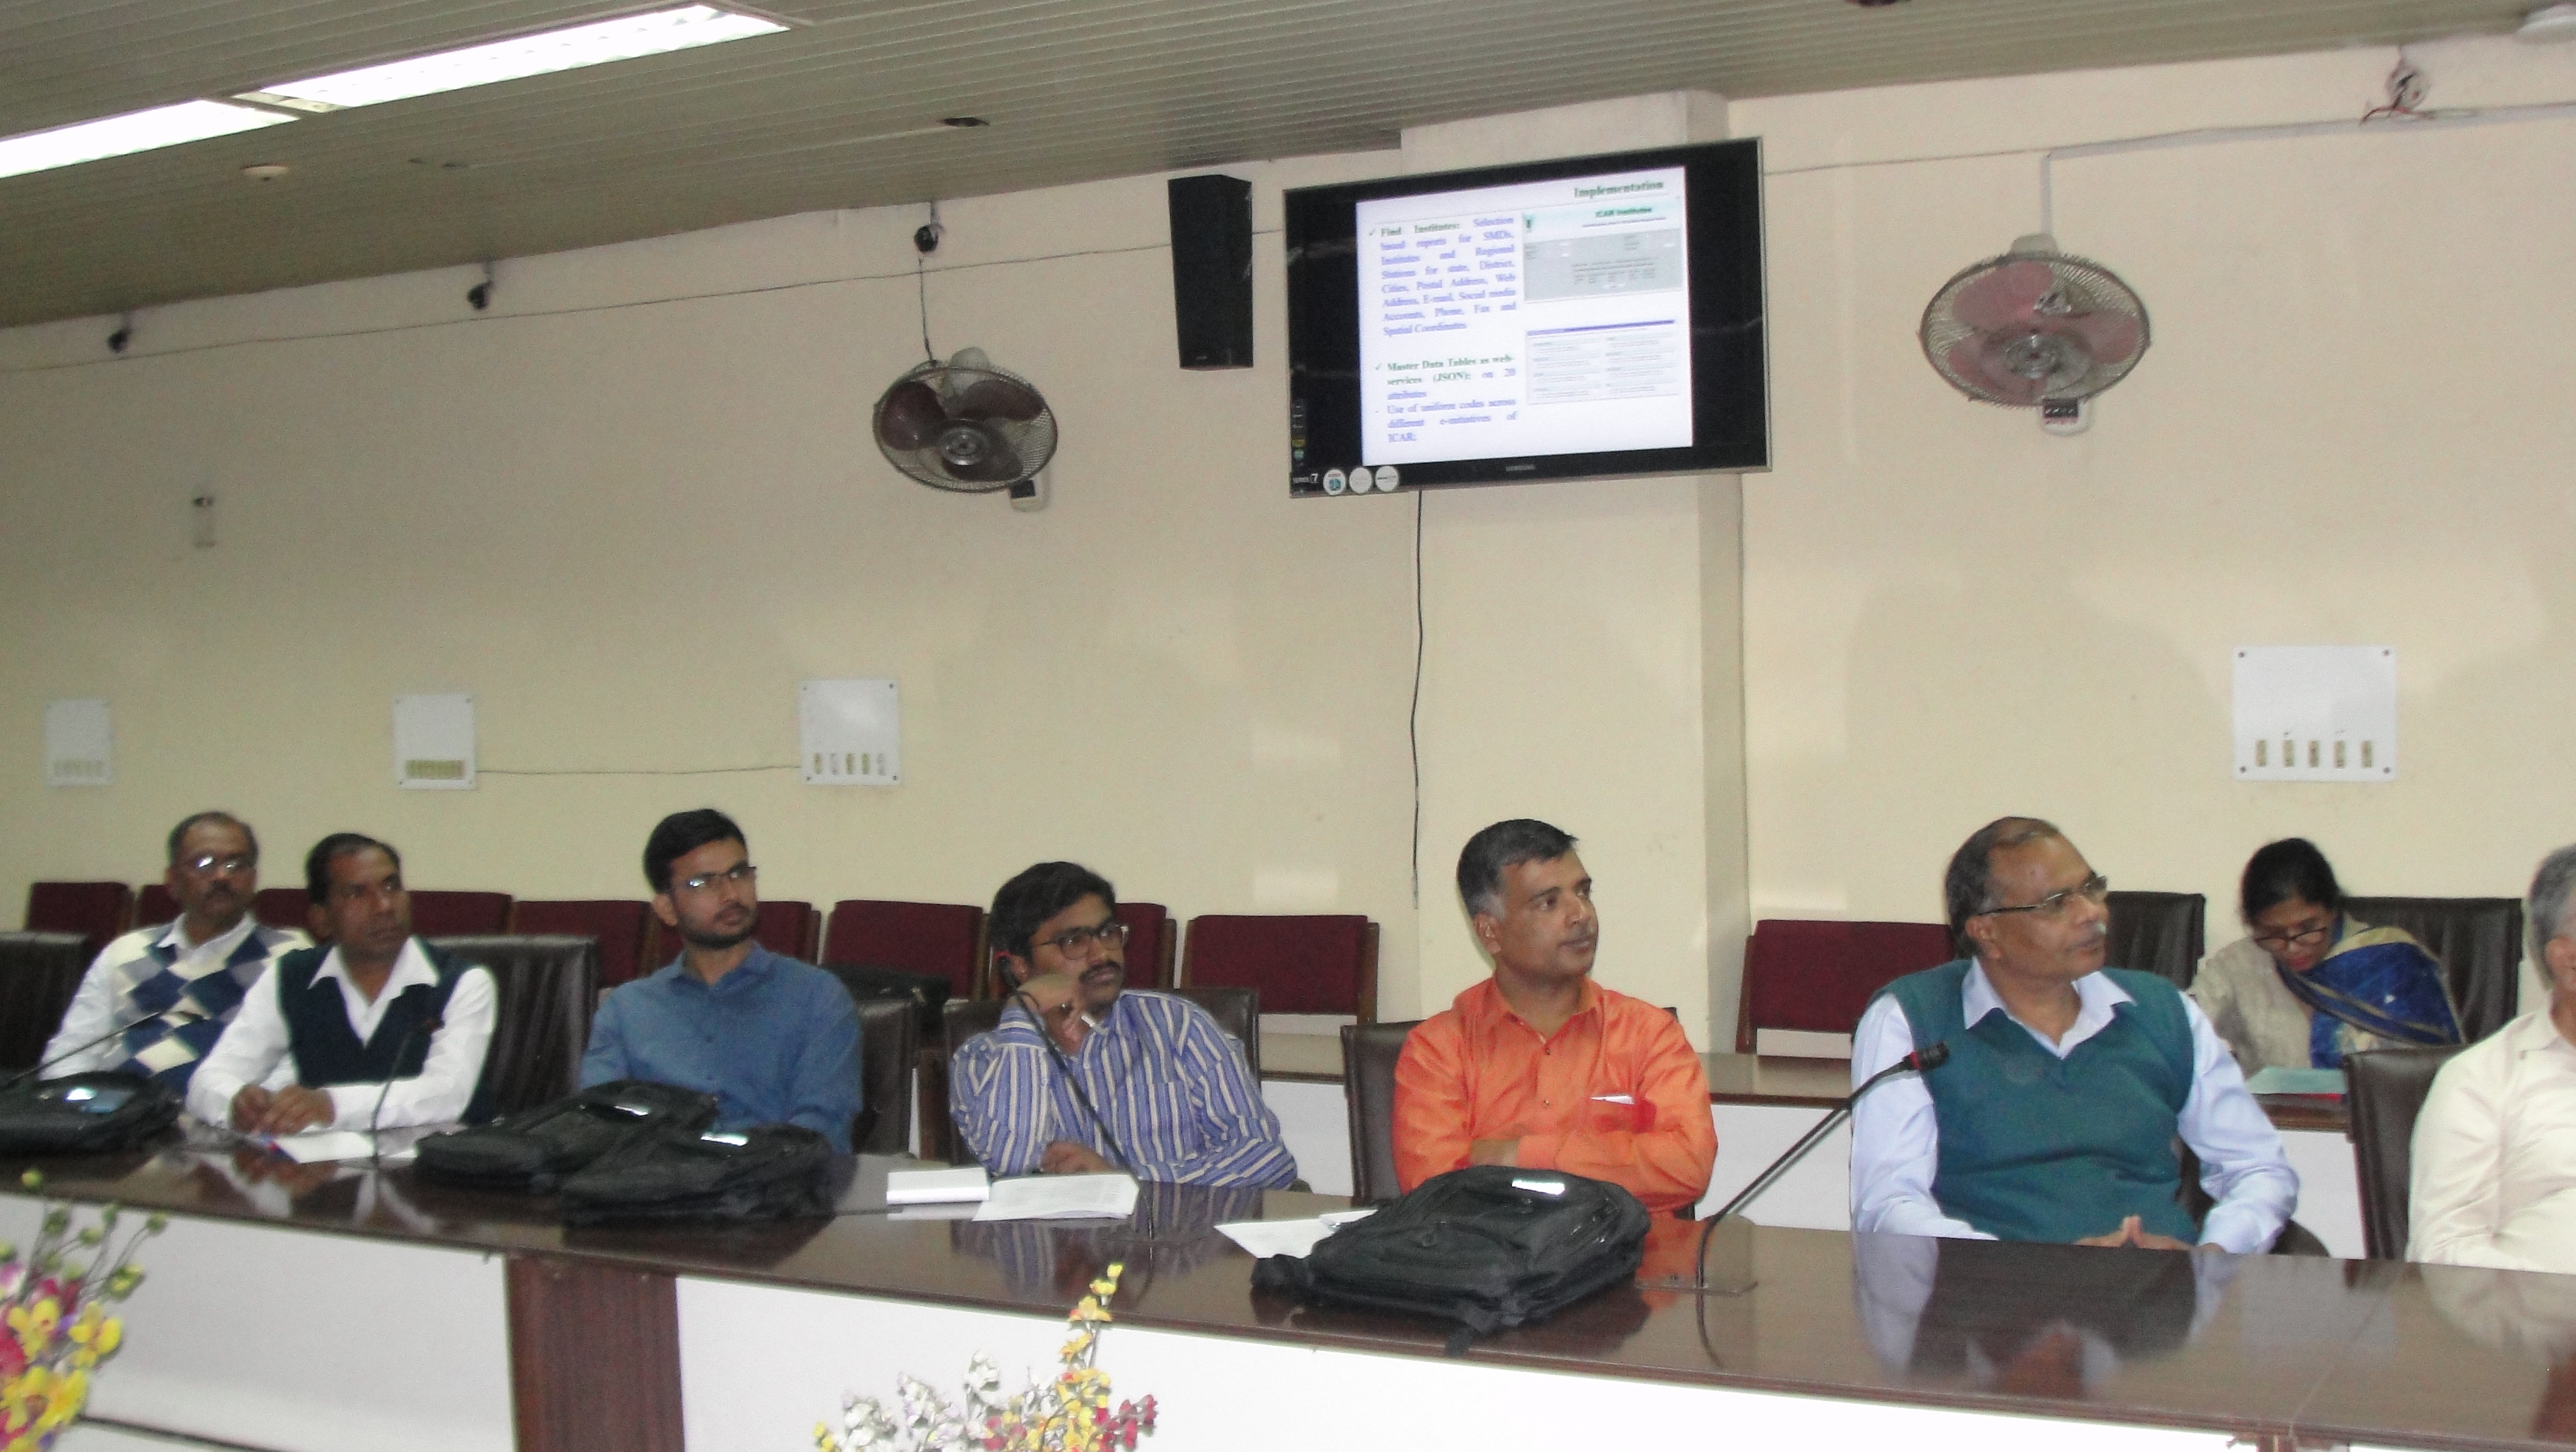 Workshop on ICAR KRISHI Portal - A Central Research Data Repository (18-19 March, 2019; Venue: New Delhi)